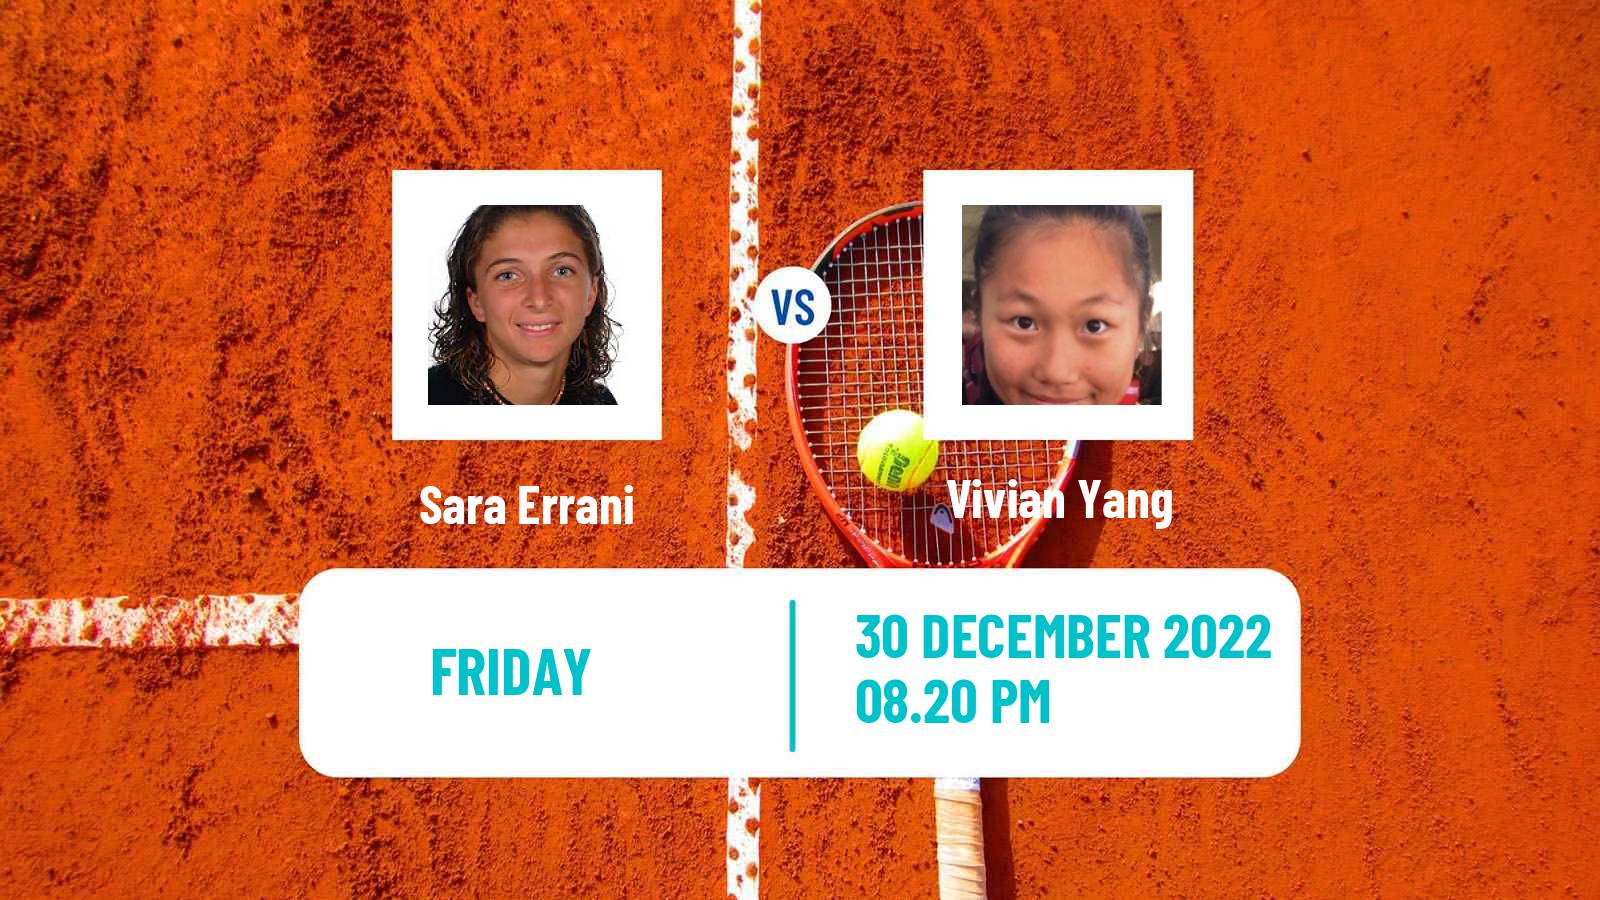 Tennis WTA Auckland Sara Errani - Vivian Yang